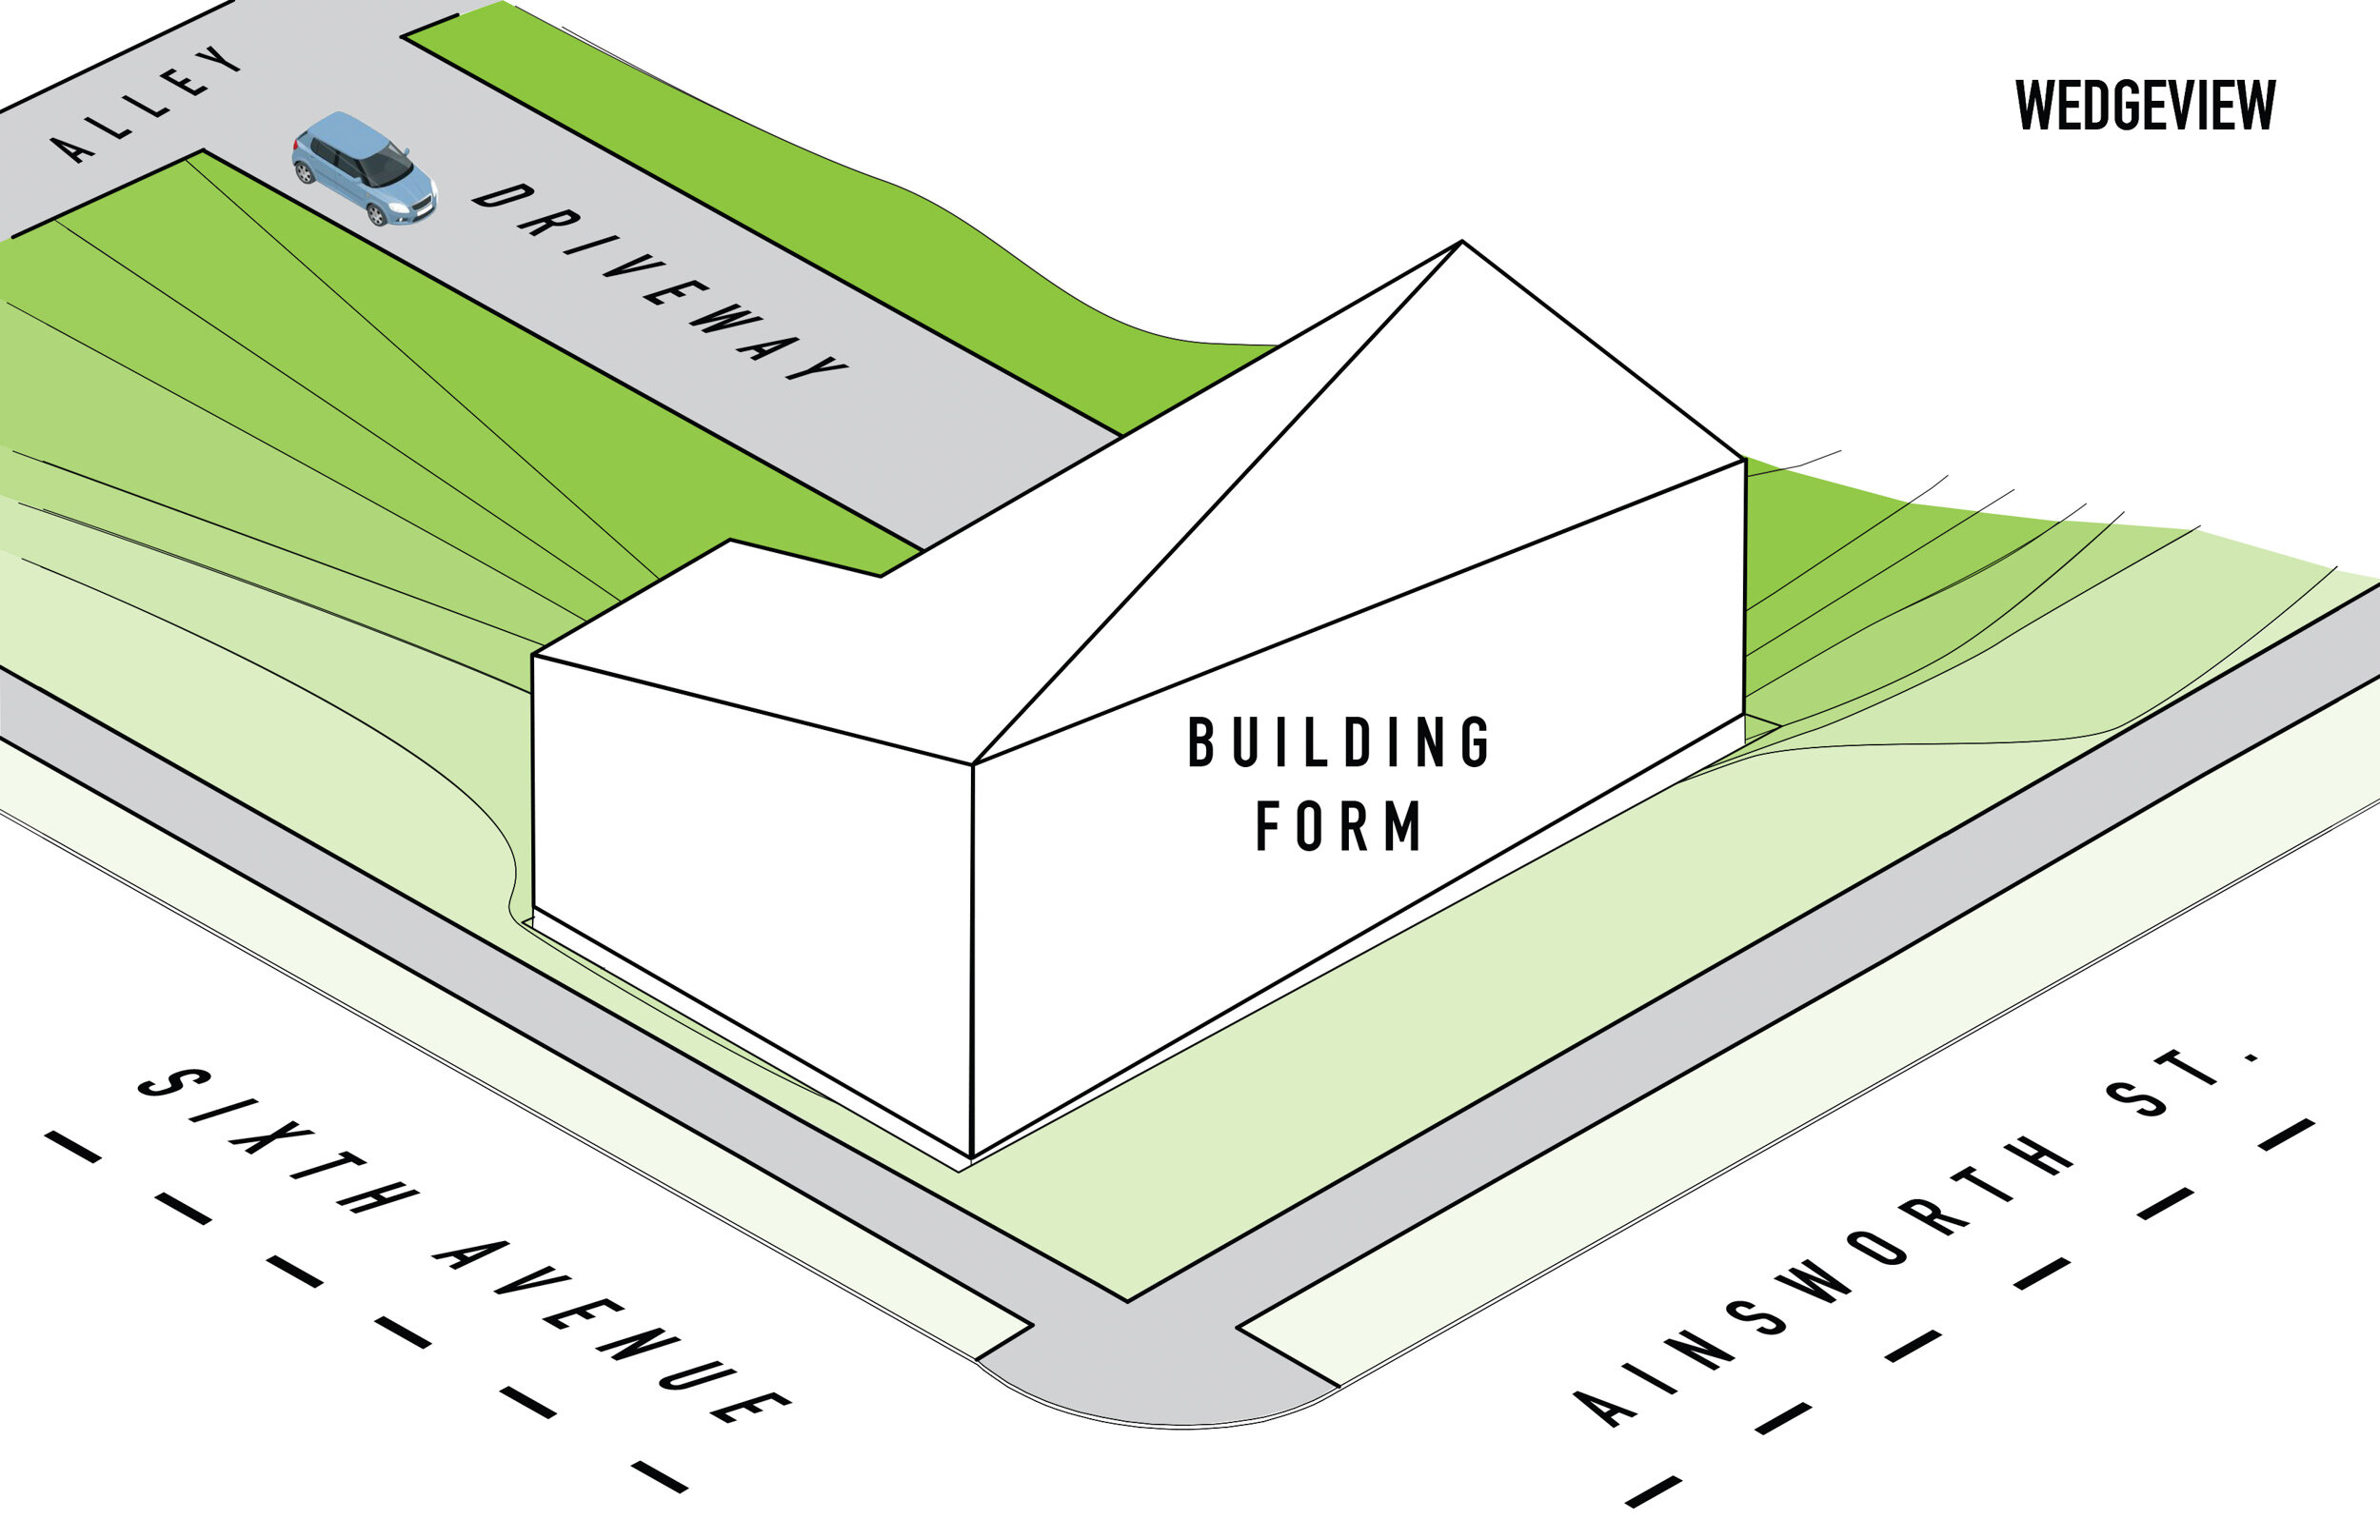 wc_studio_architect_tacoma_WEDGEVIEW 4.jpg